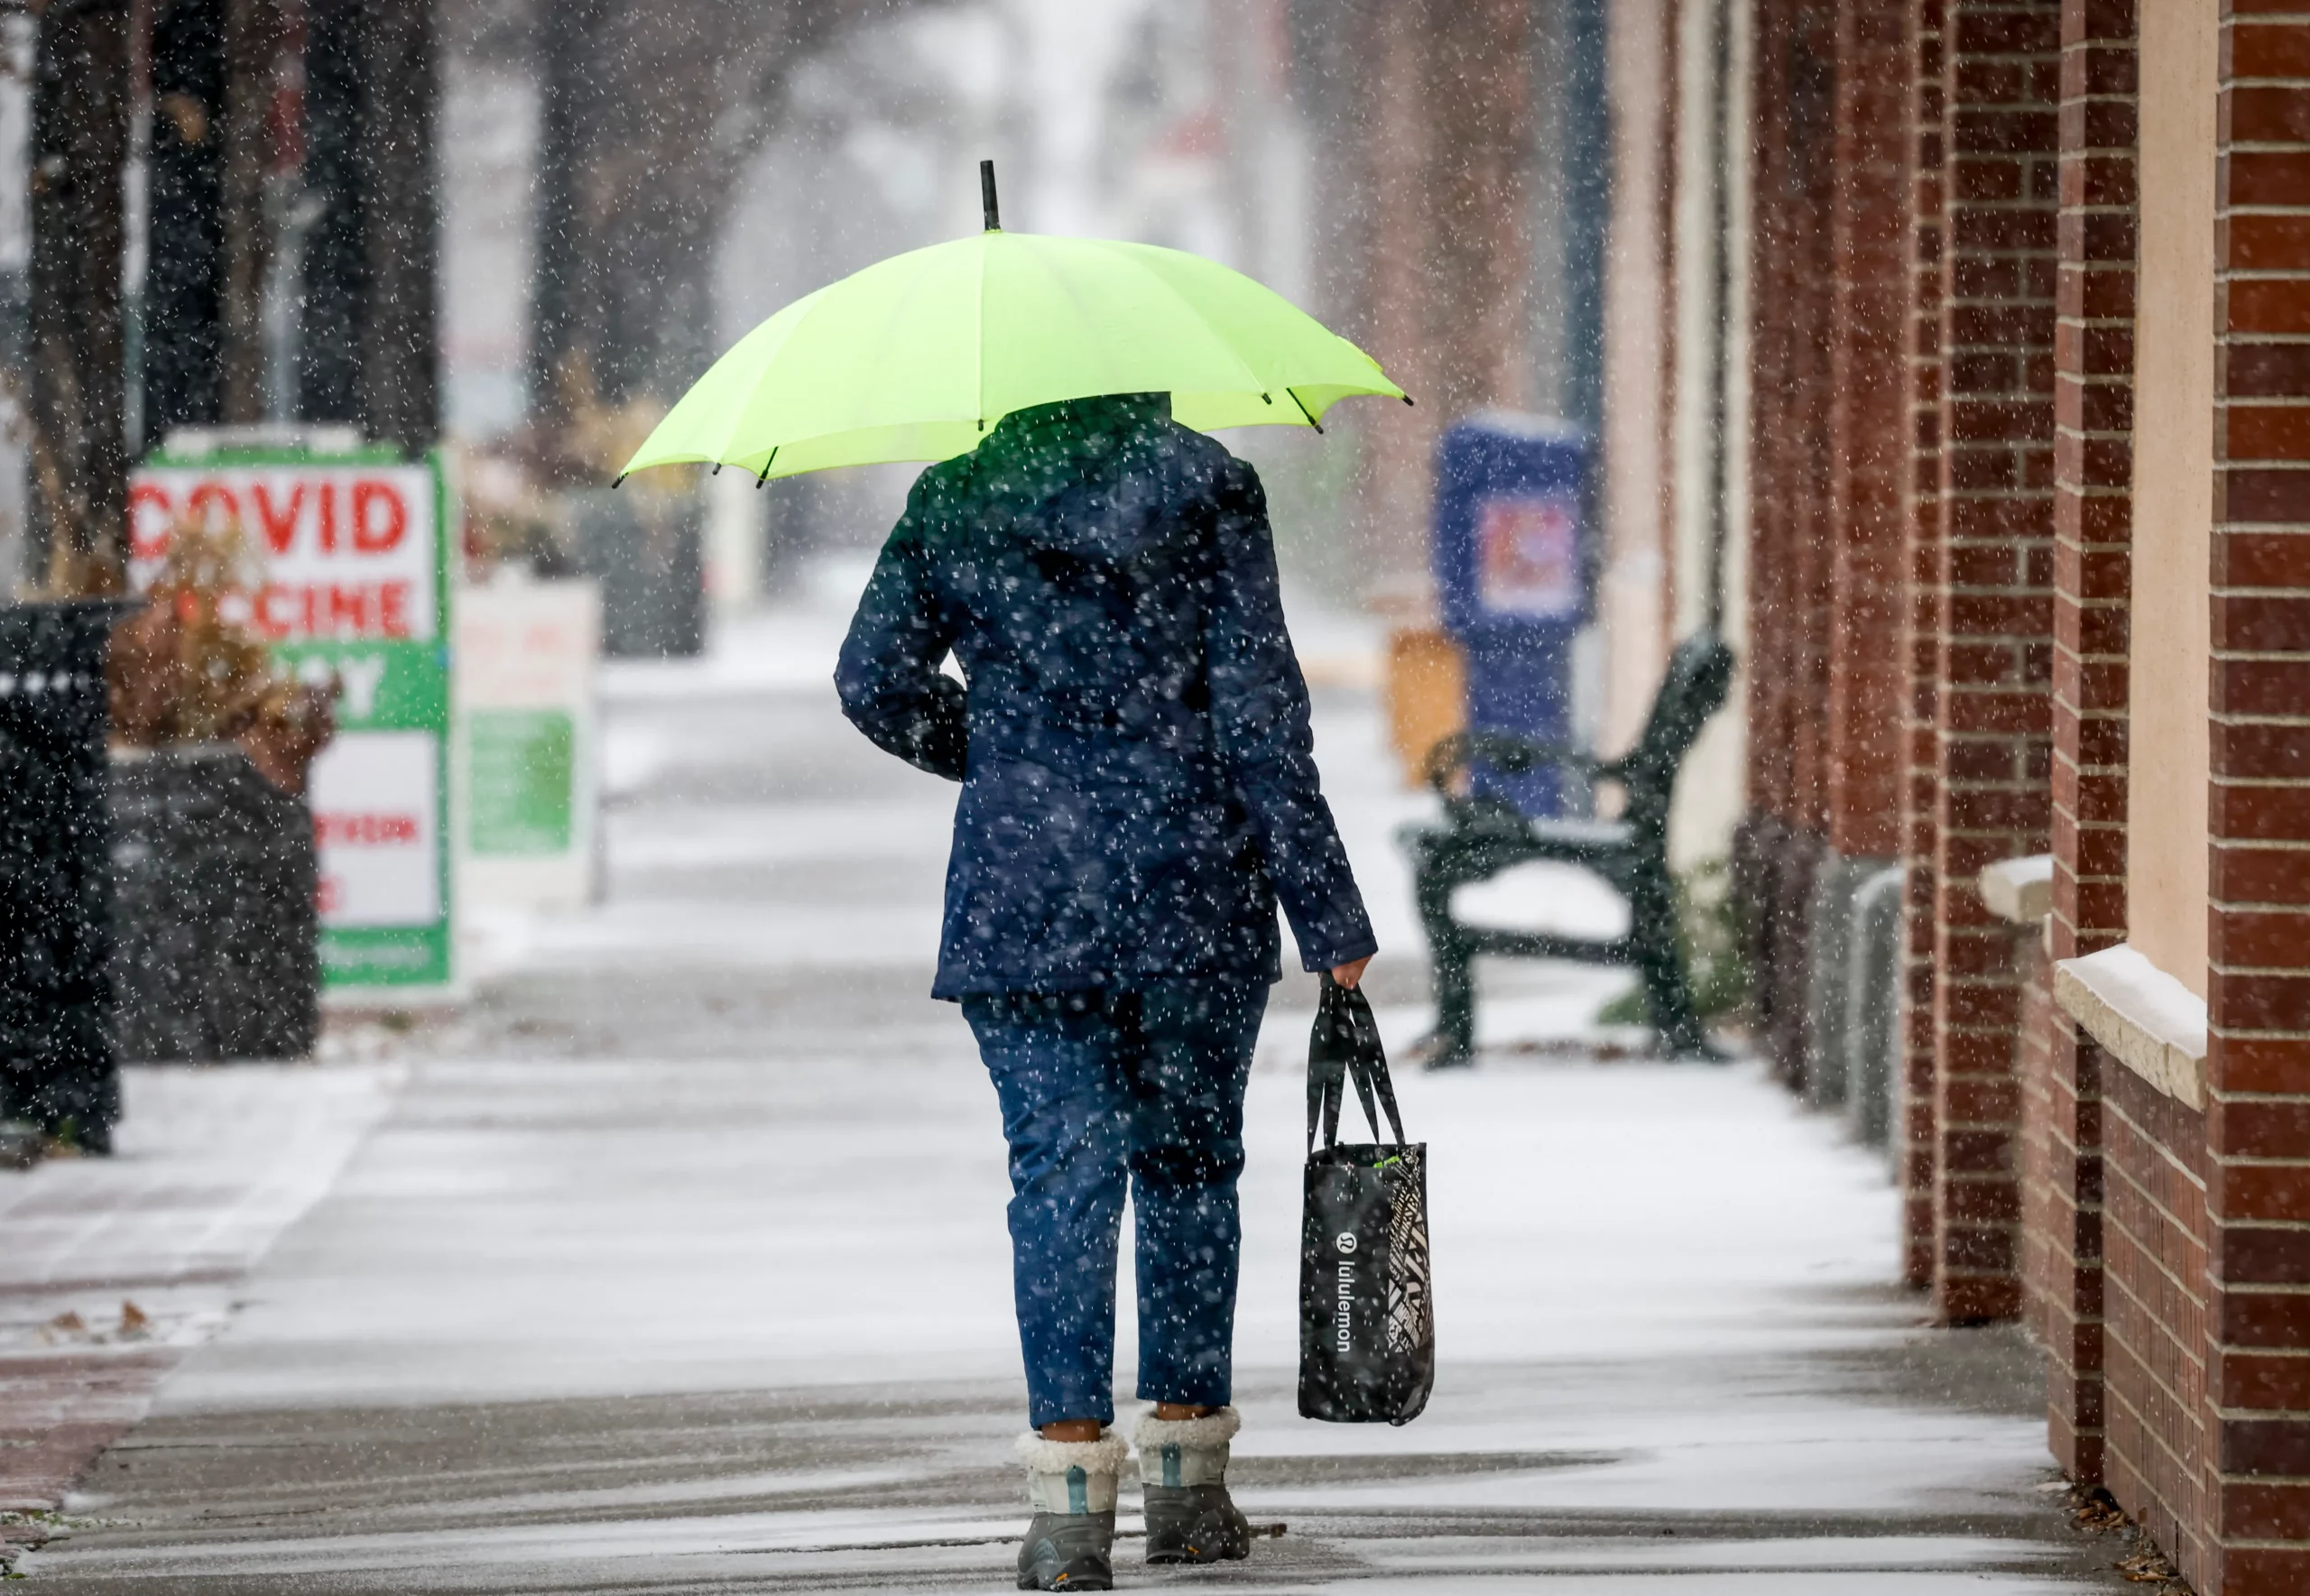 Strong El Nino winter may lead to below-average snowfall in Canada, U.S.